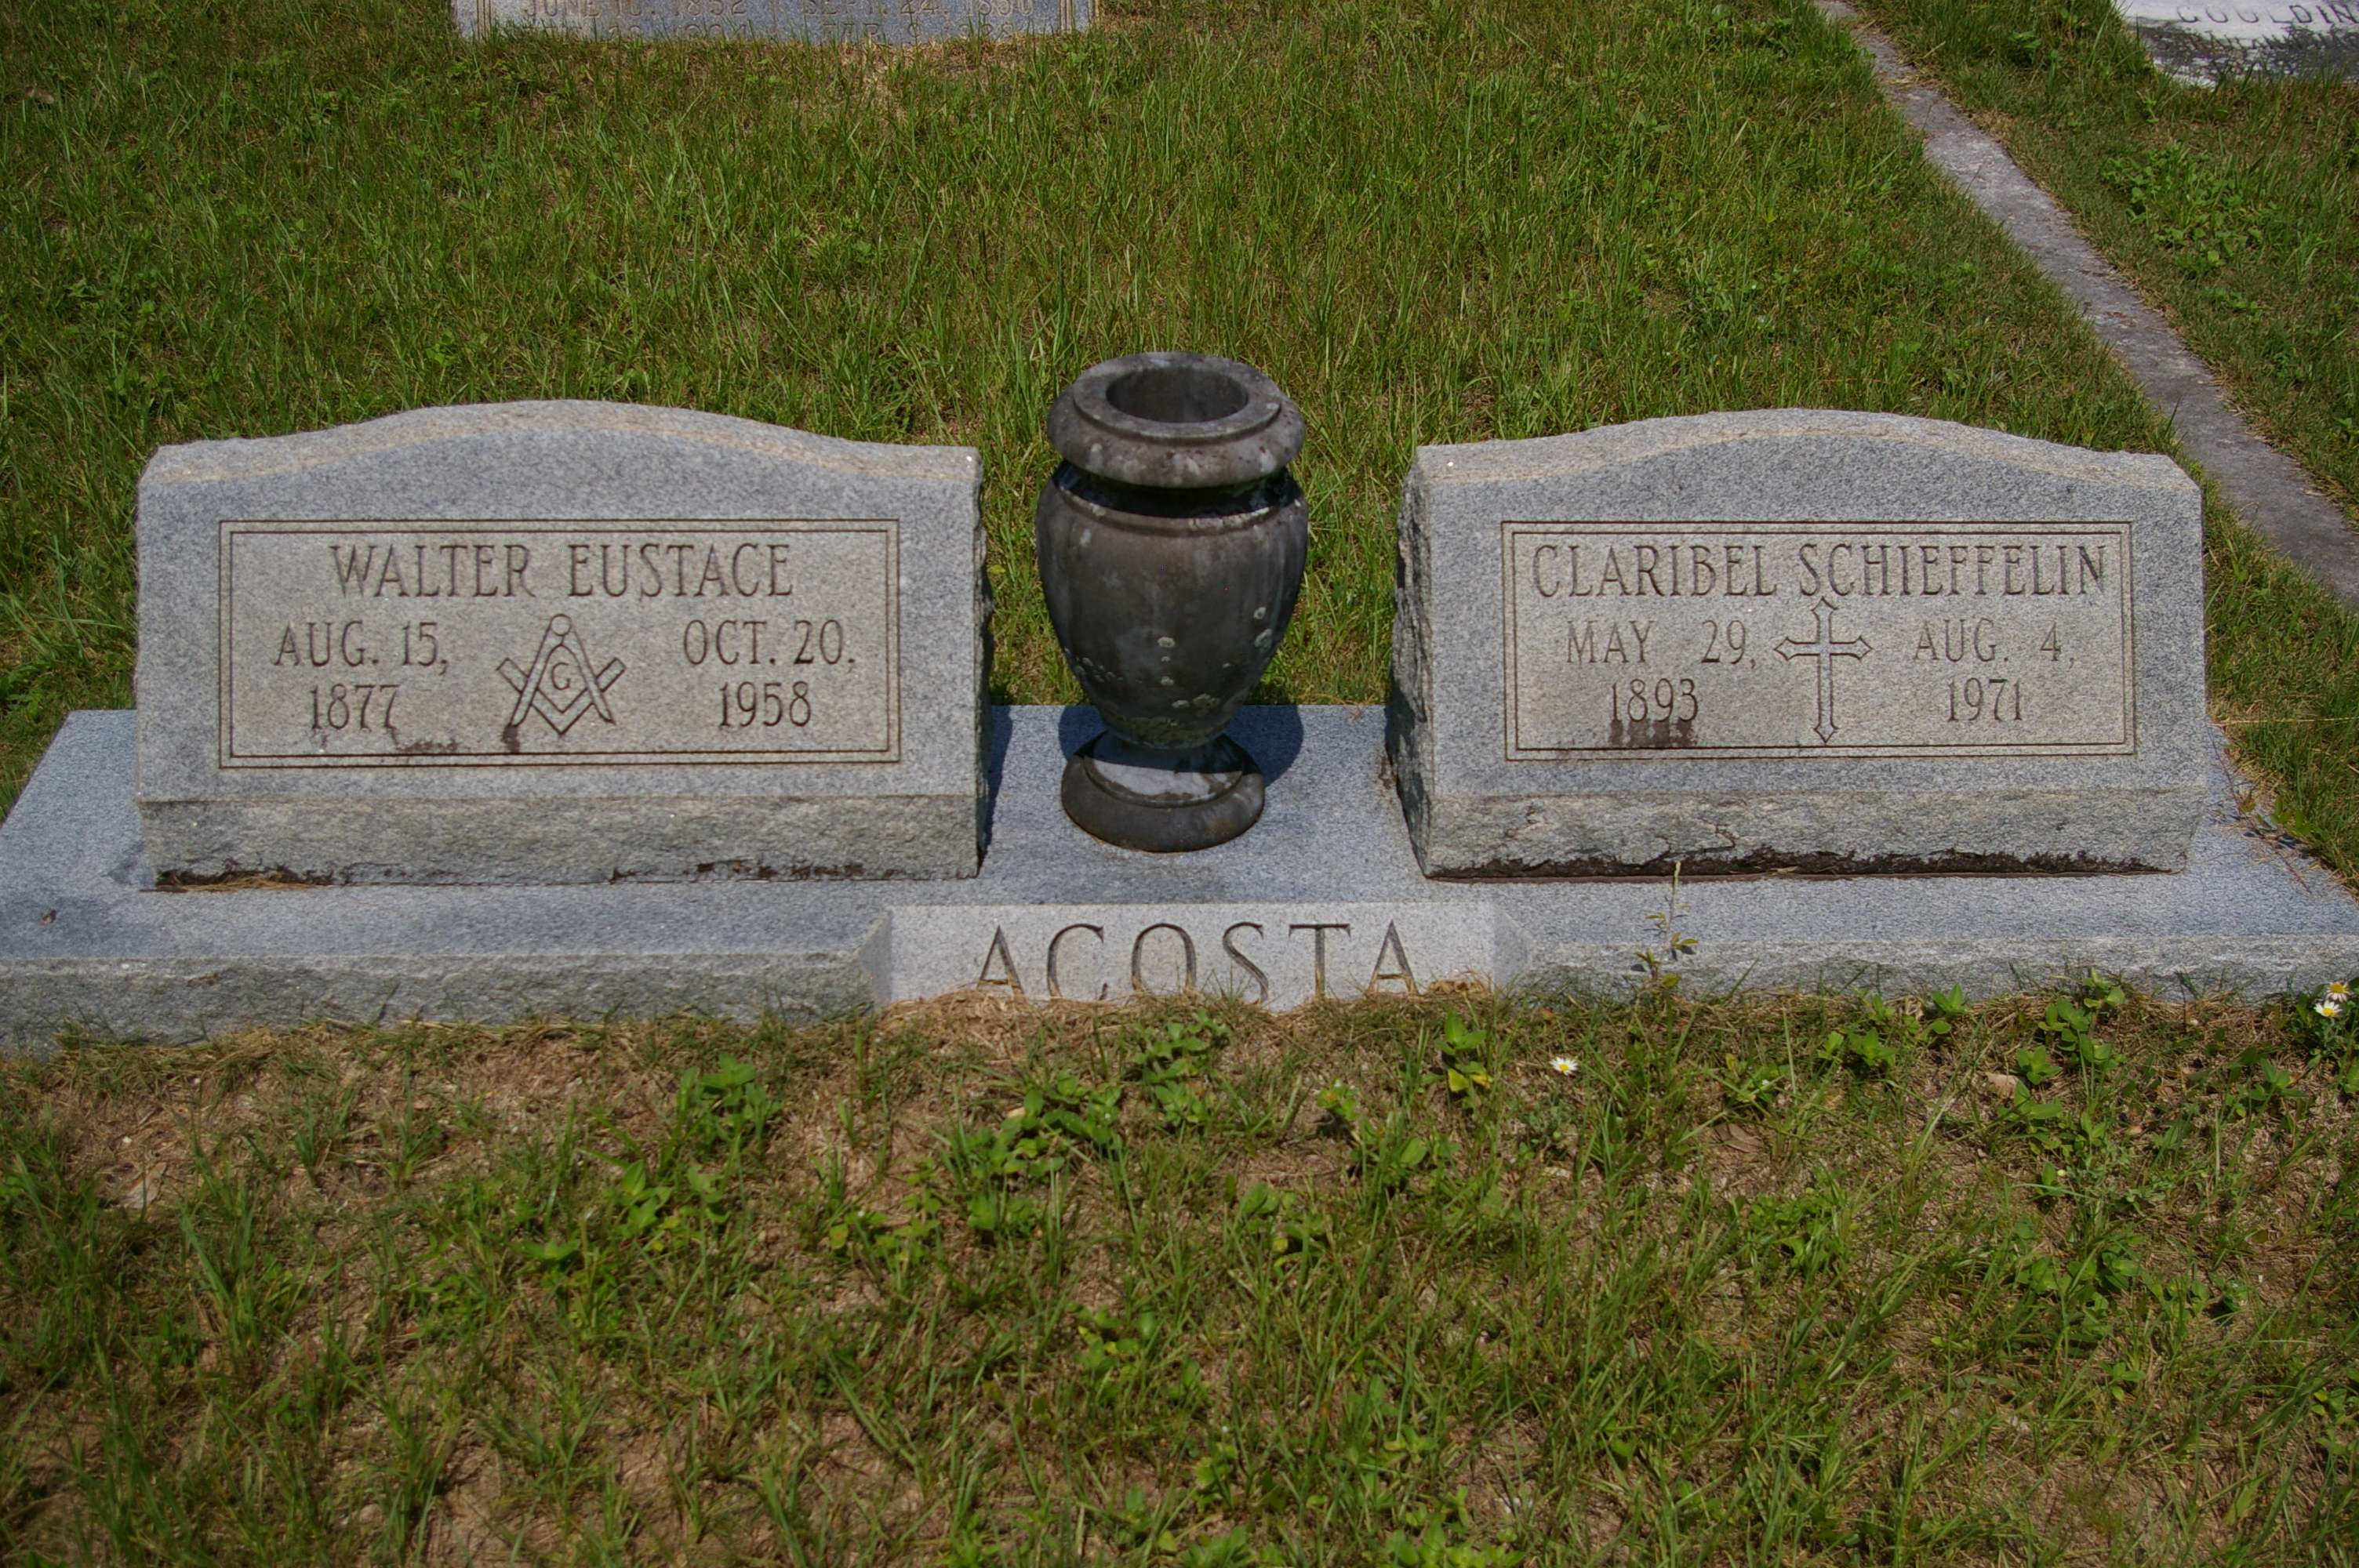 Walter Eustace Acosta